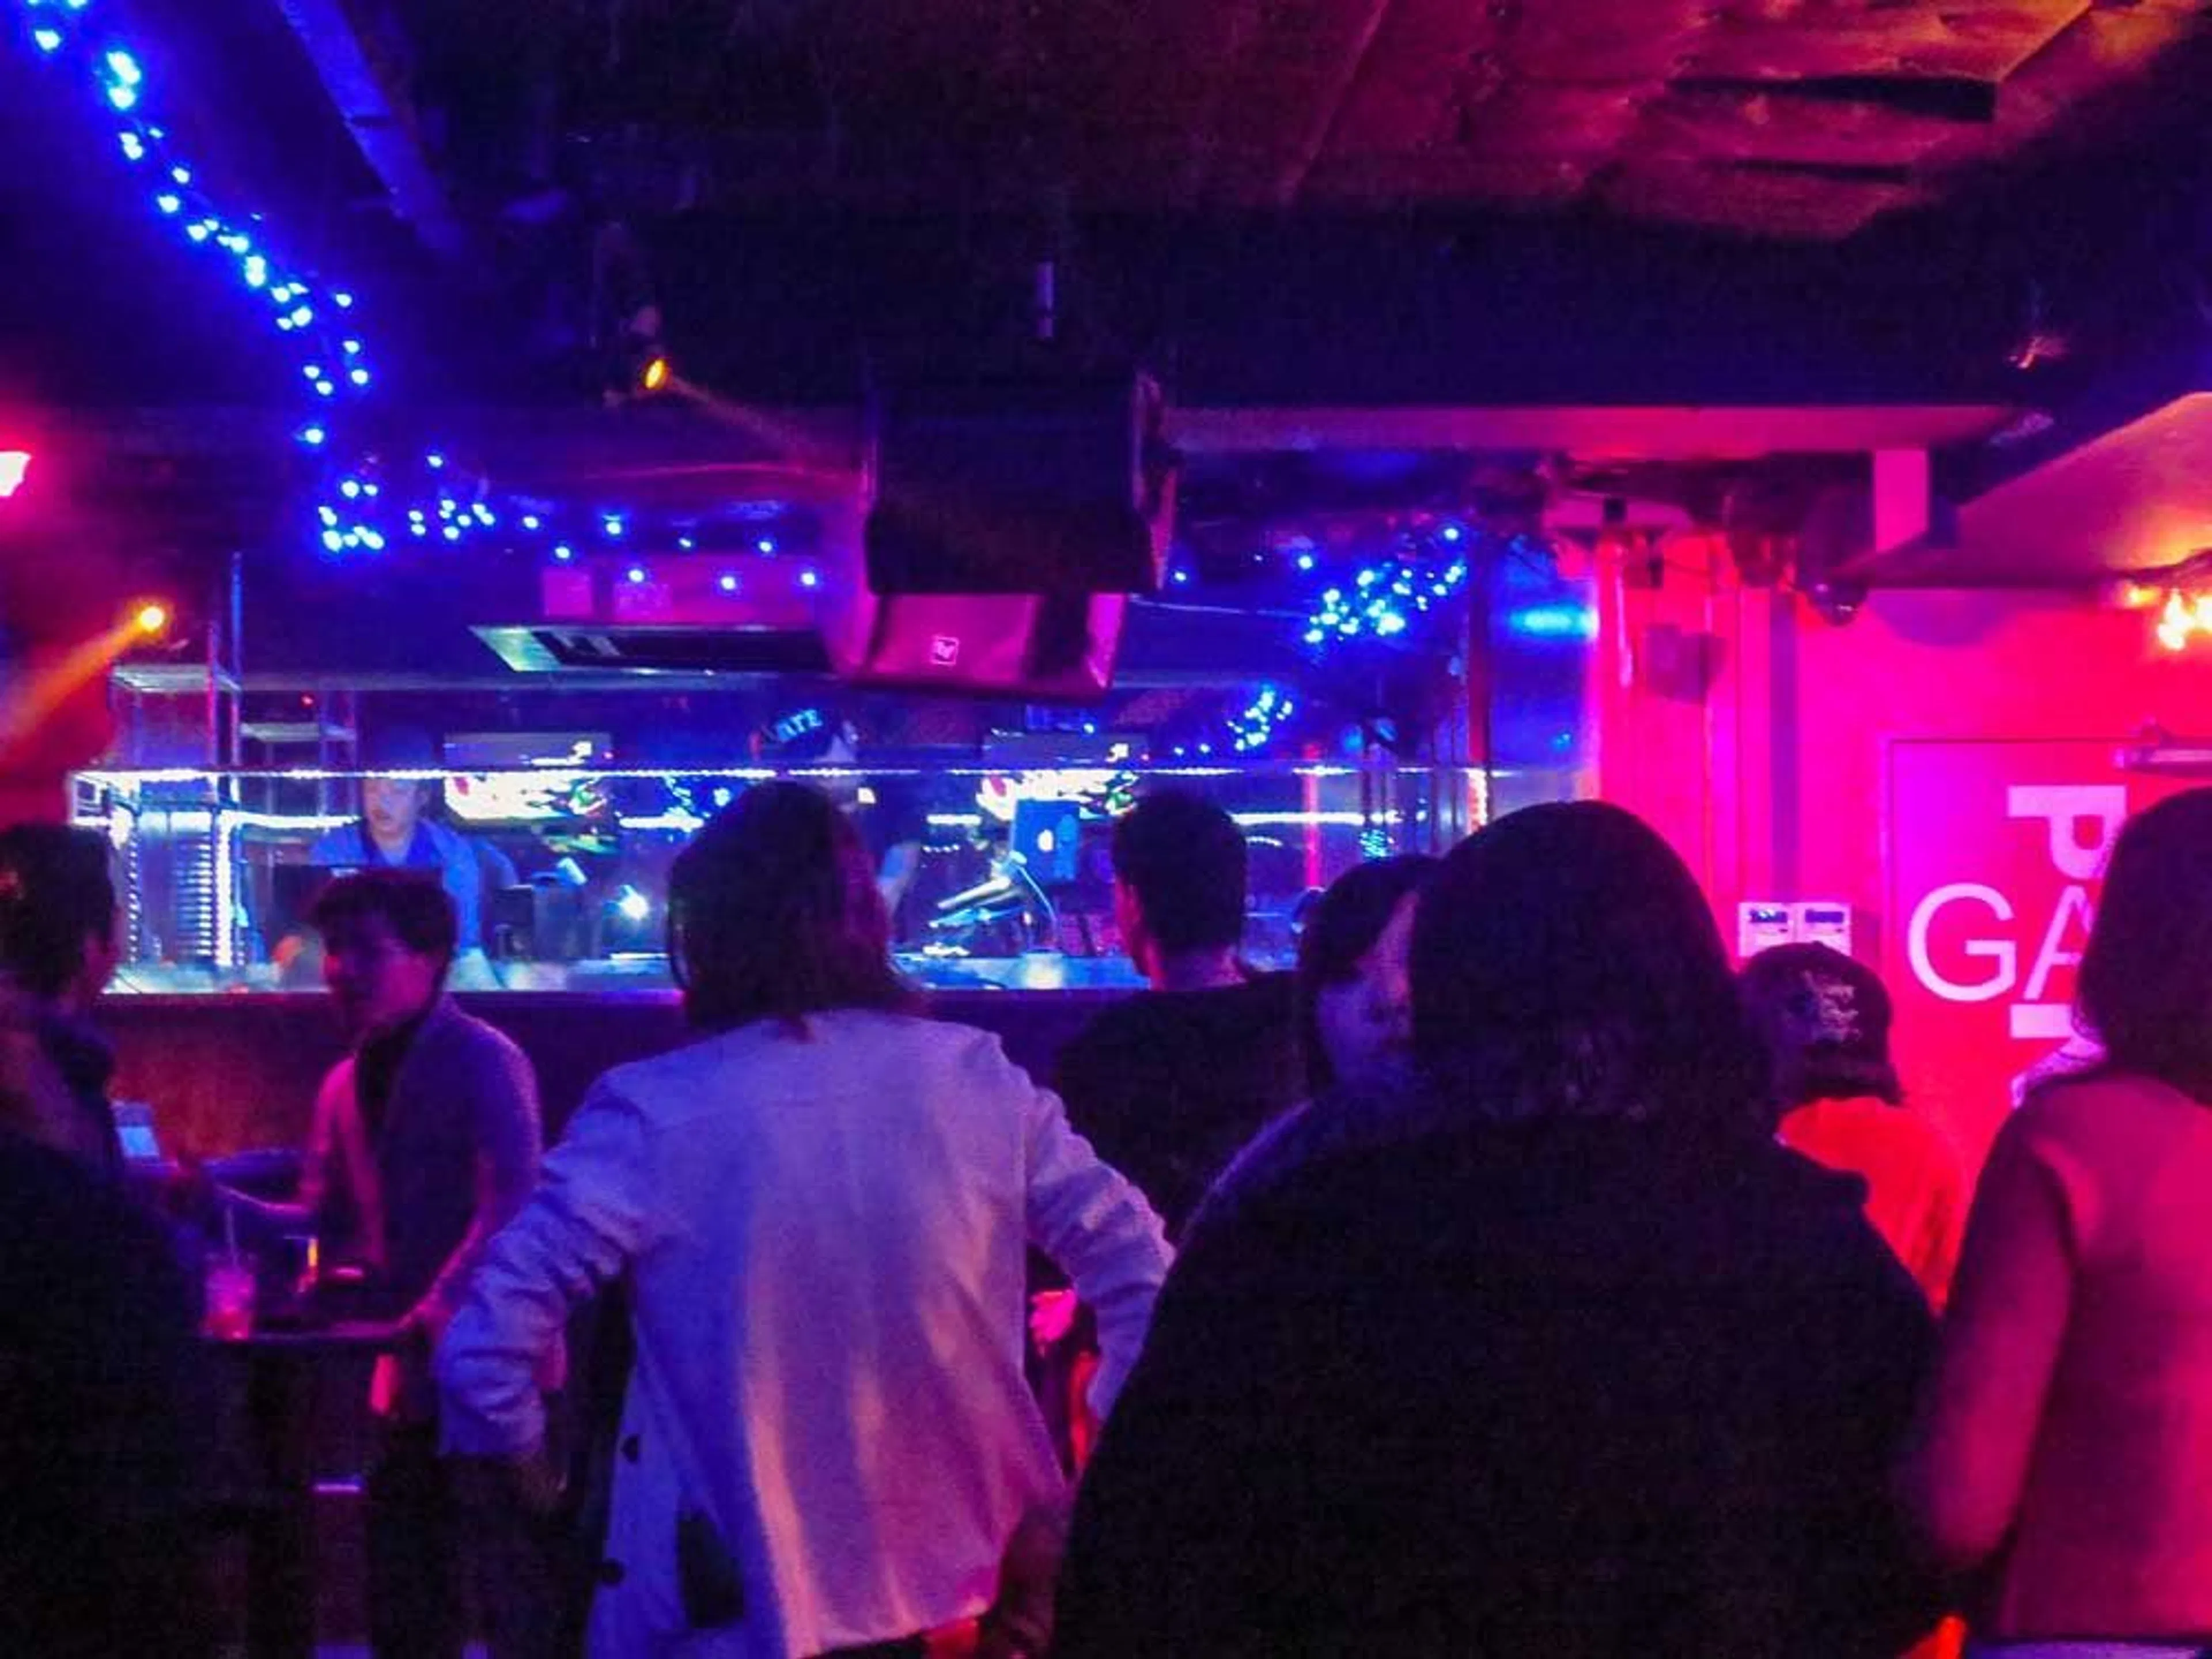 Enjoying the glow at a bar in Roppongi